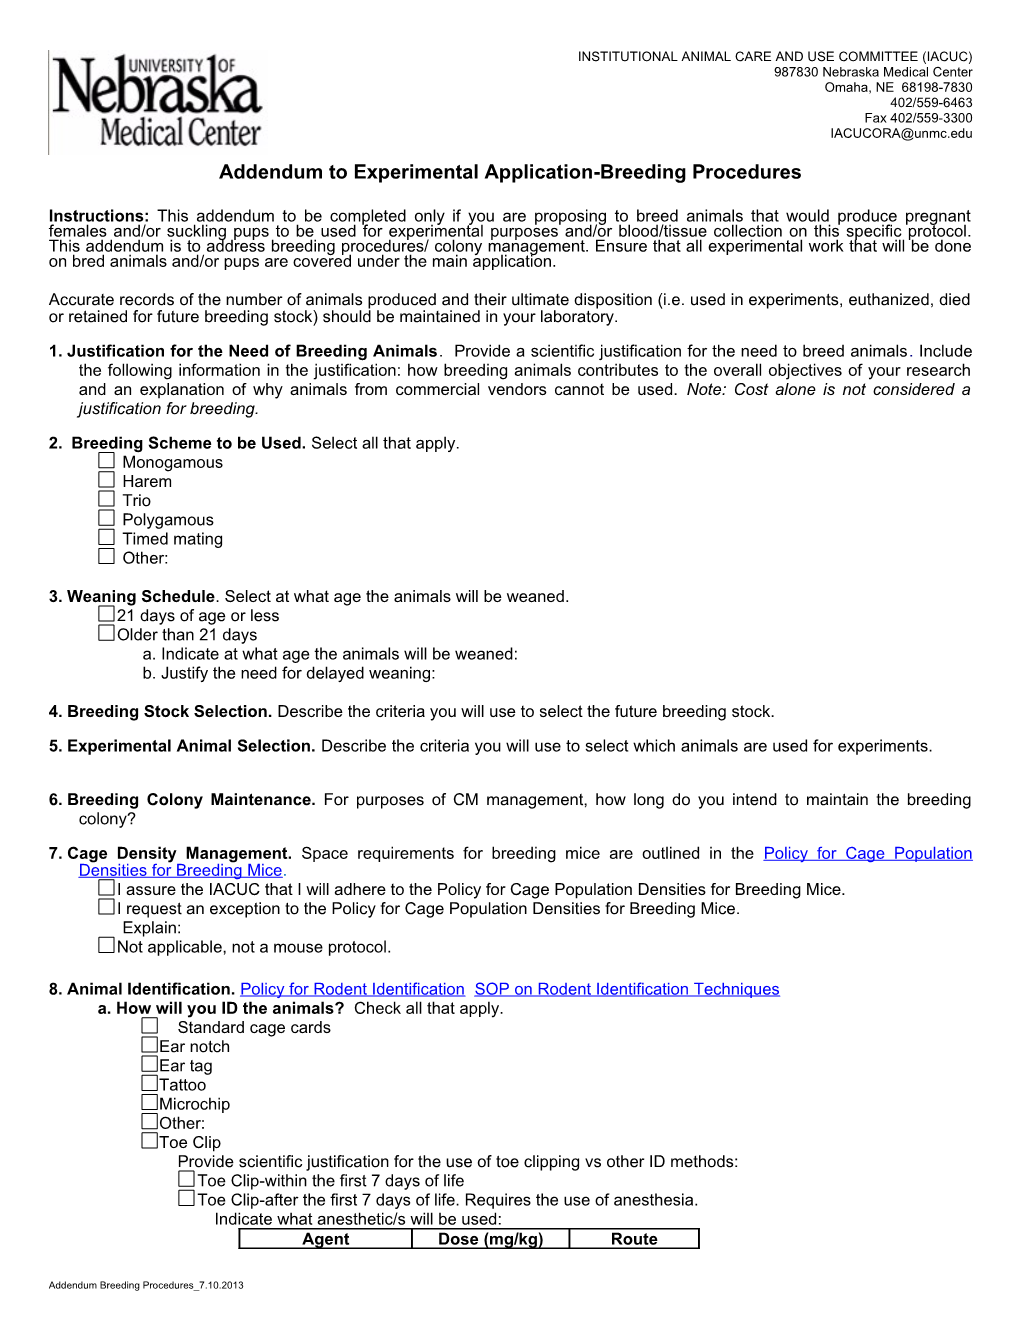 Addendum to Experimental Application-Breeding Procedures